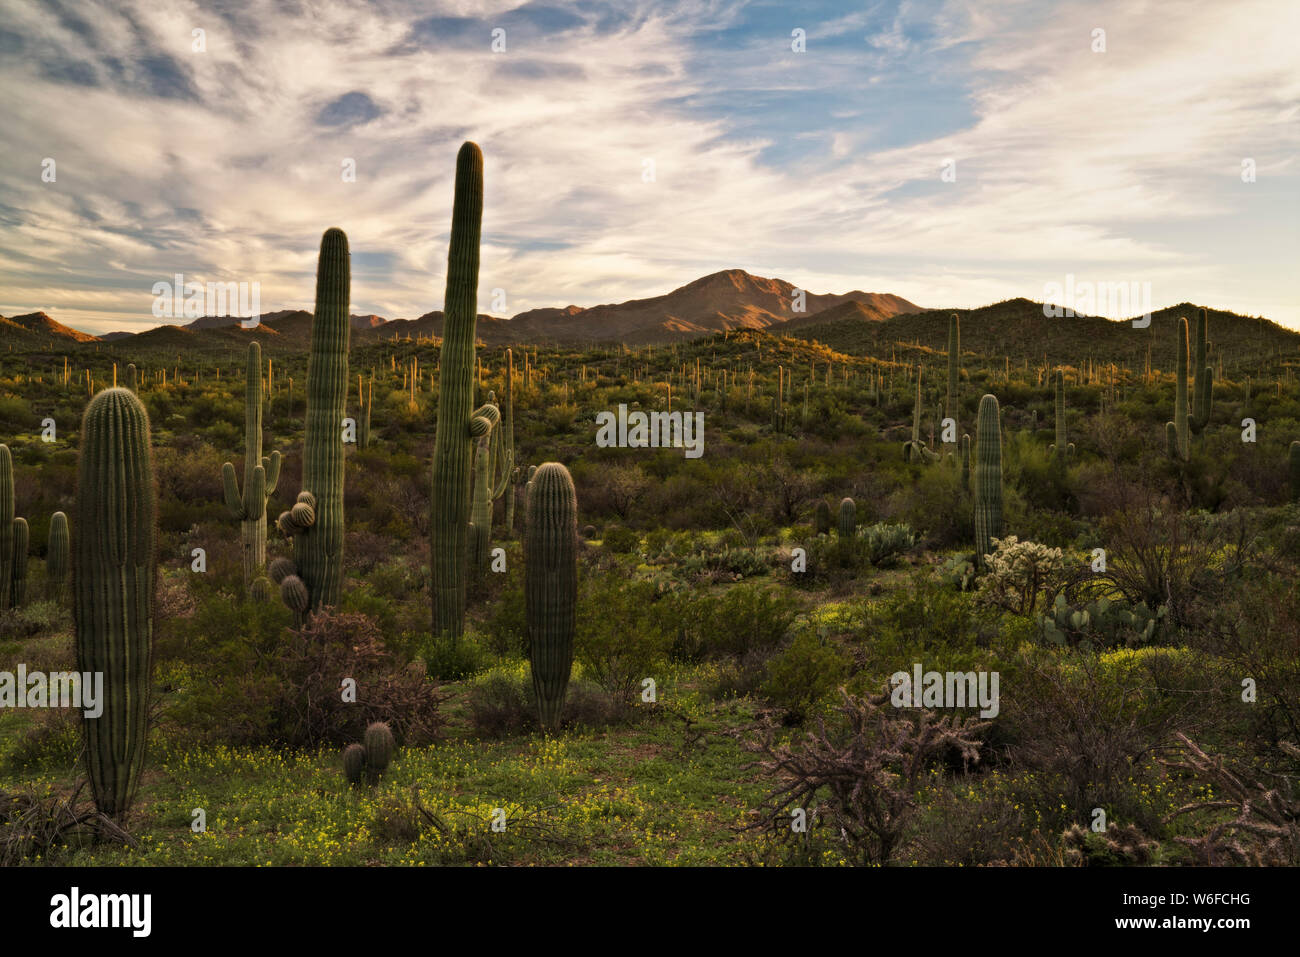 Last light bathes Wasson Peak and the spring greenery in Arizona’s Saguaro National Park. Stock Photo